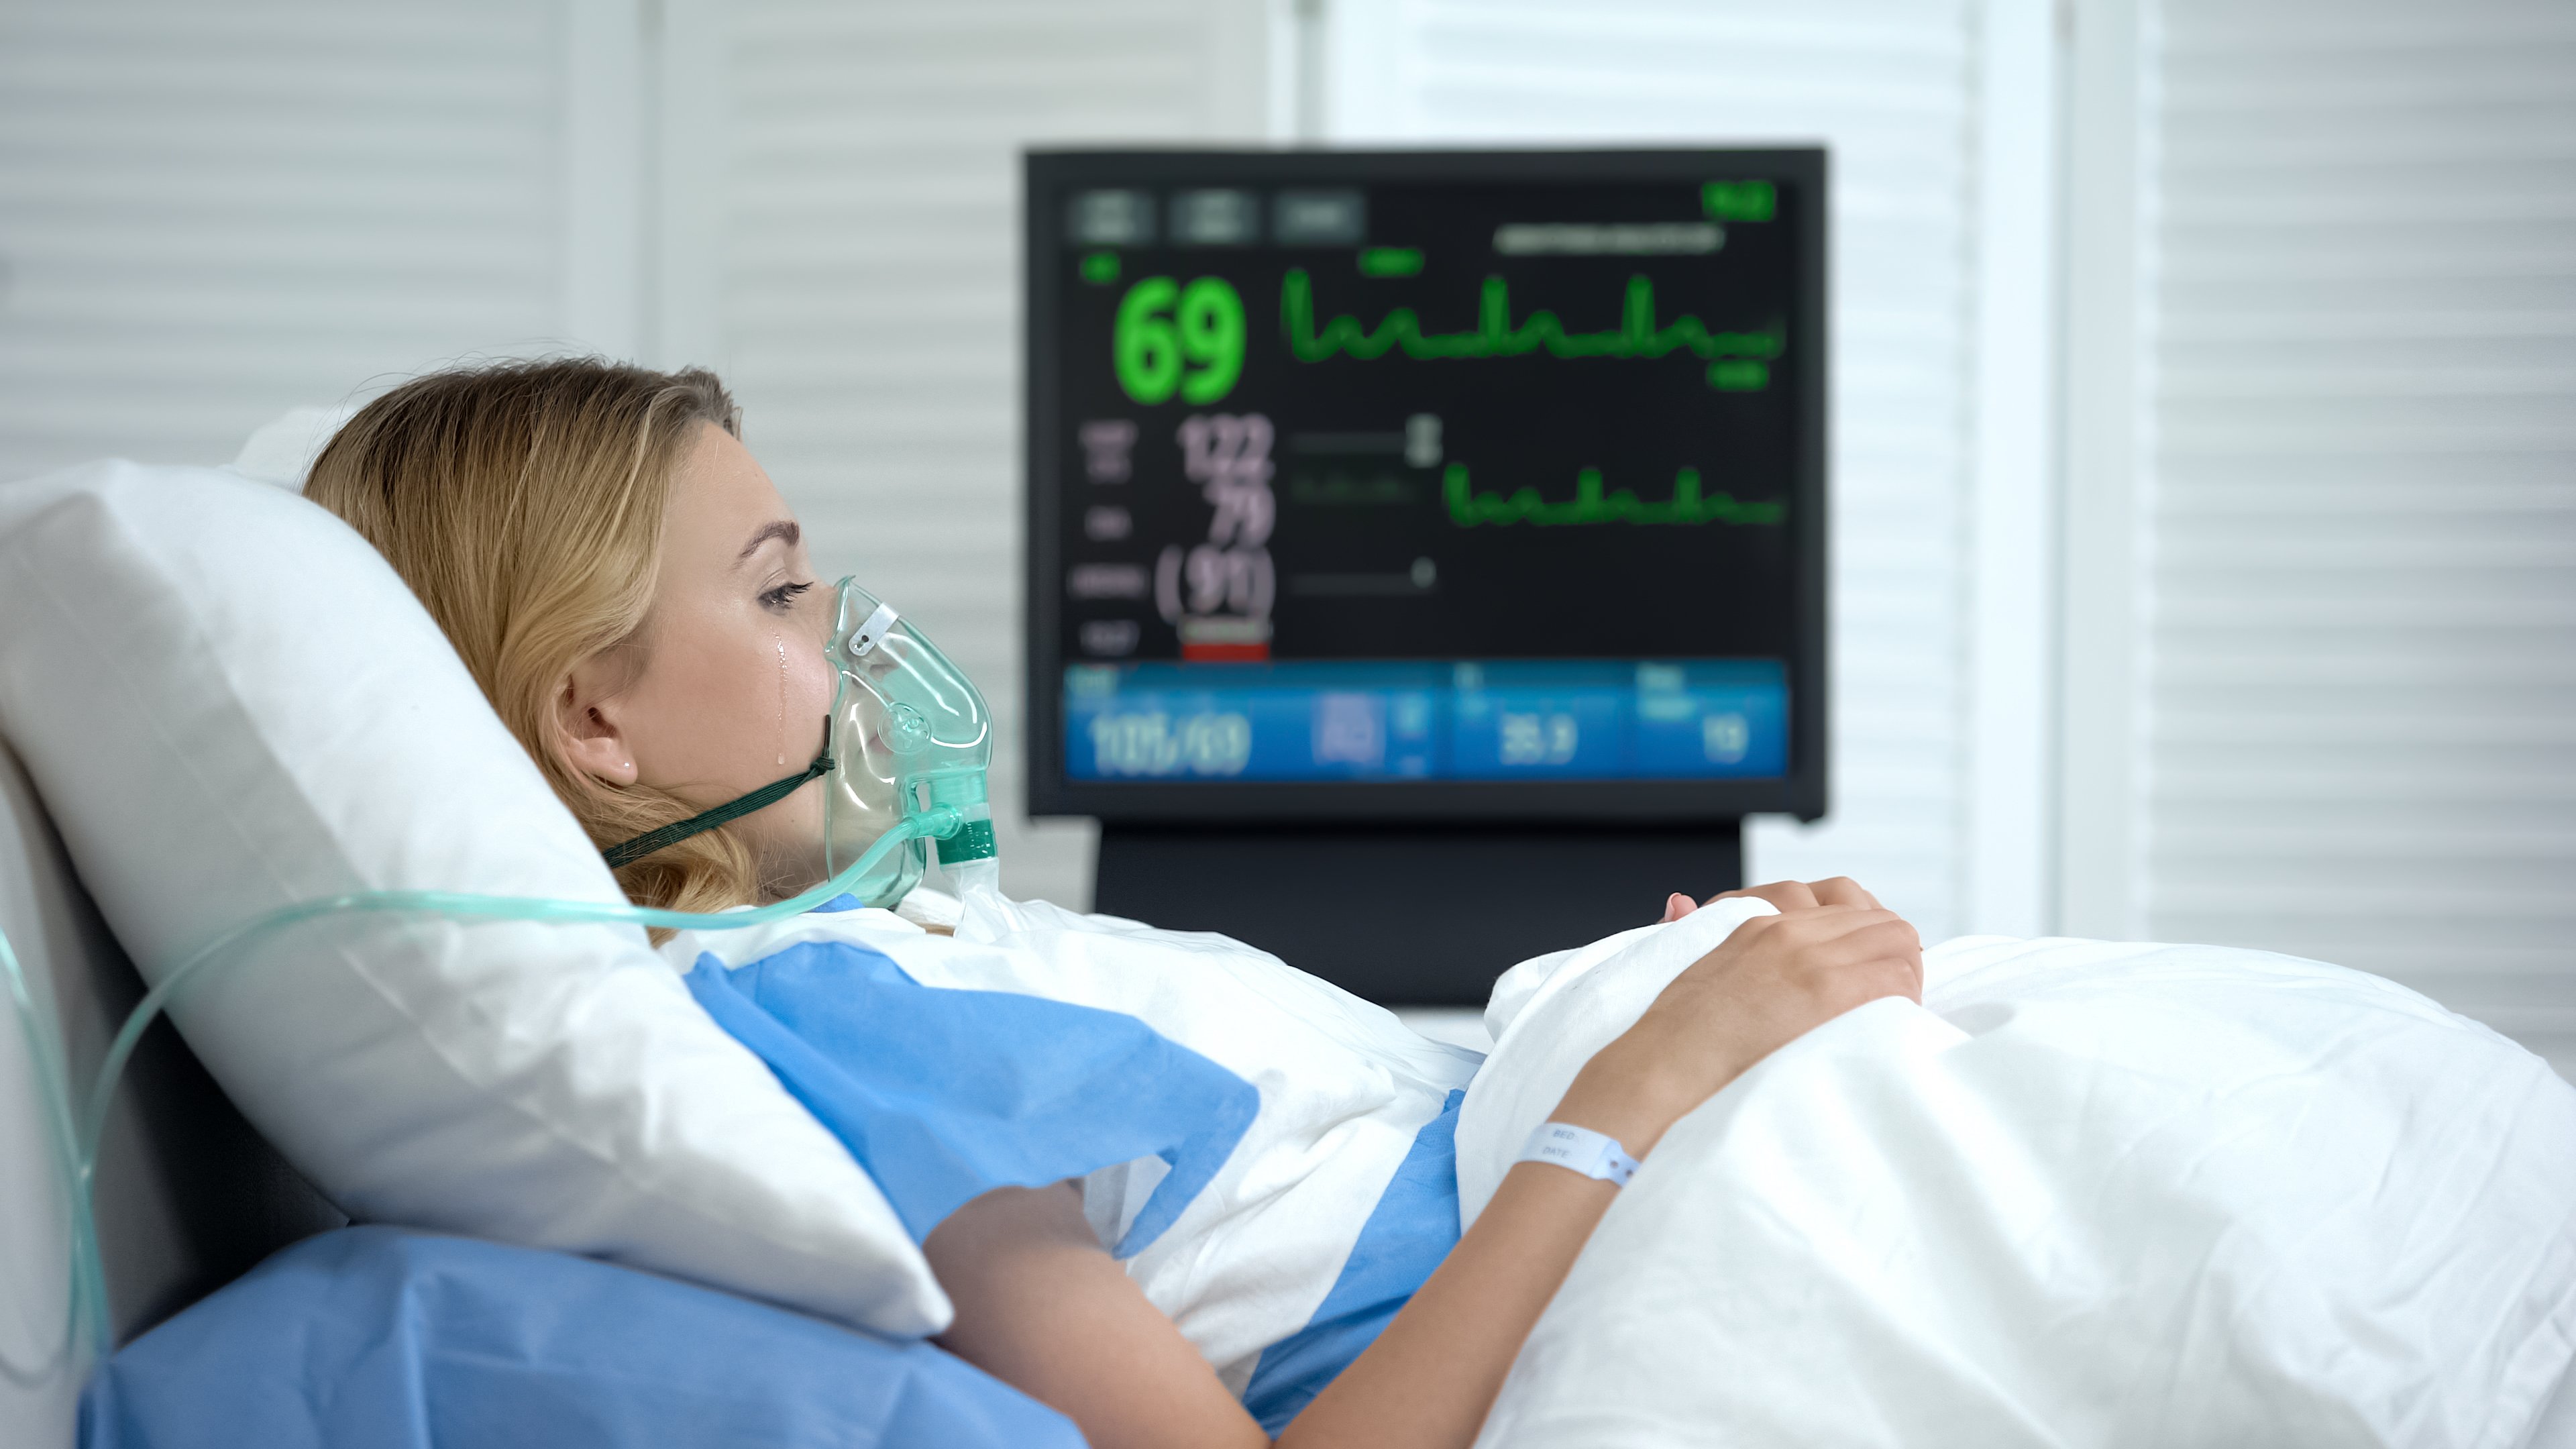 Mujer hospitalizada. | Foto: Shutterstock